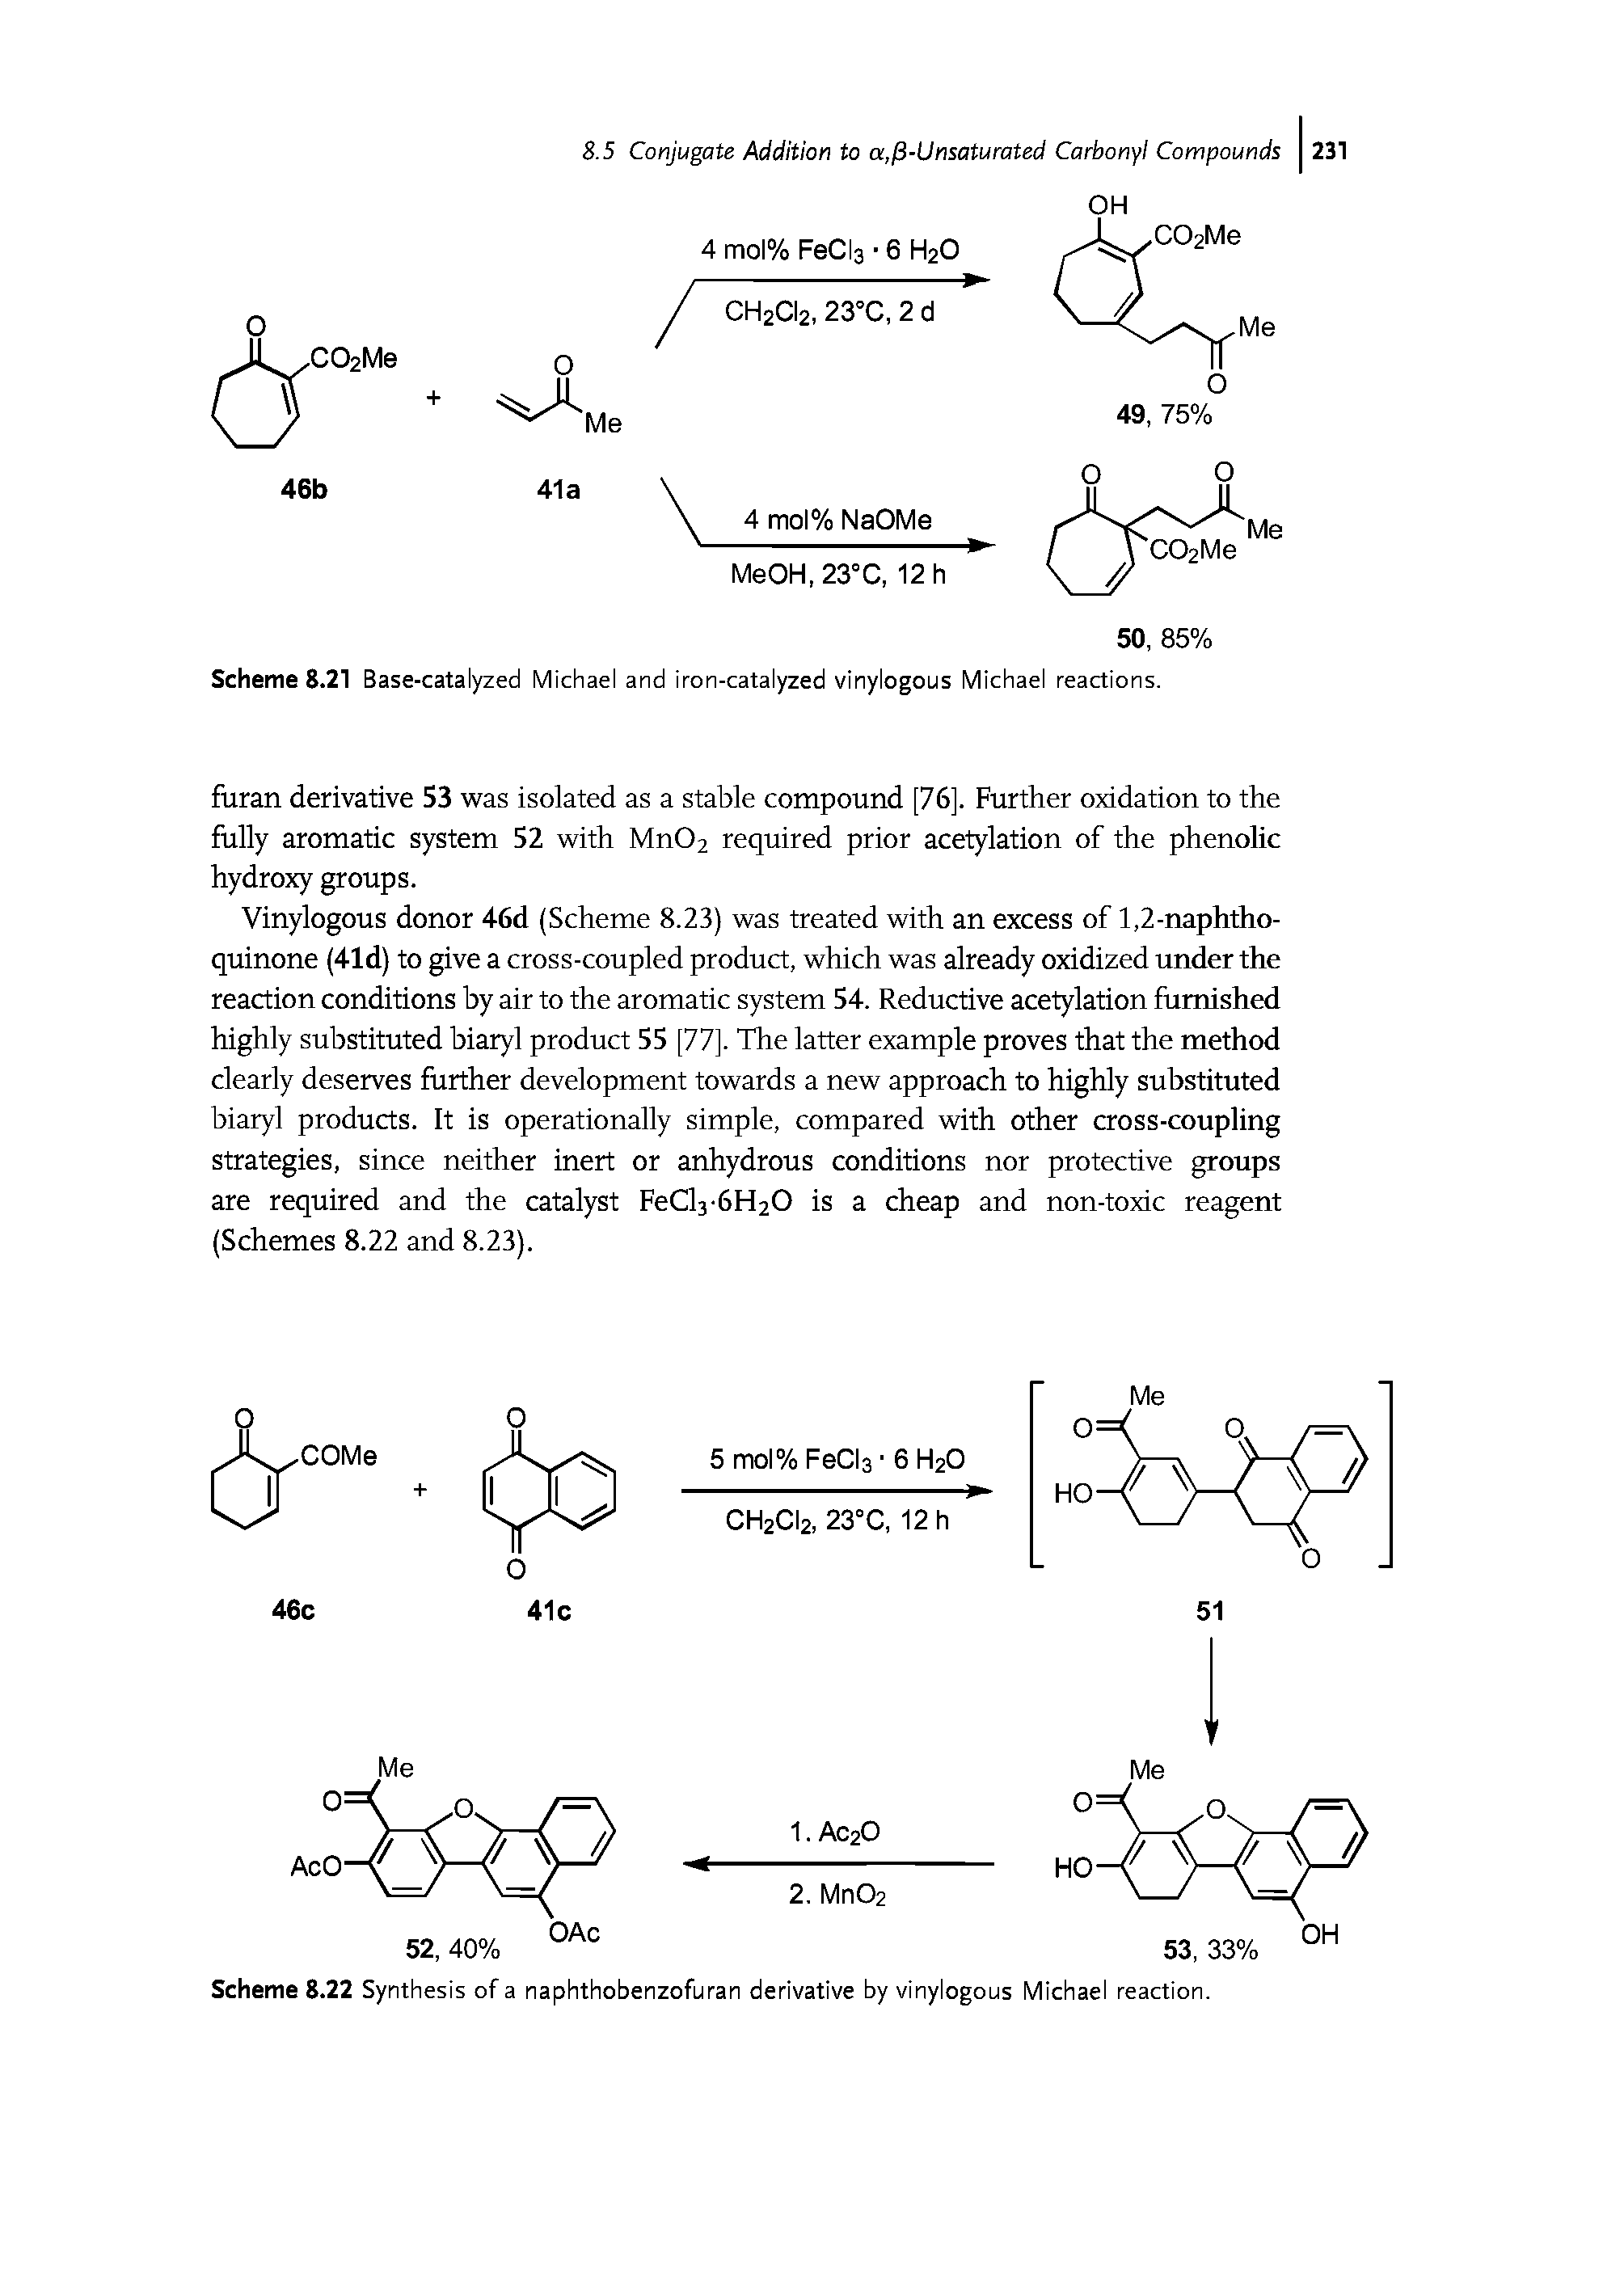 Scheme 8.21 Base-catalyzed Michael and iron-catalyzed vinylogous Michael reactions.